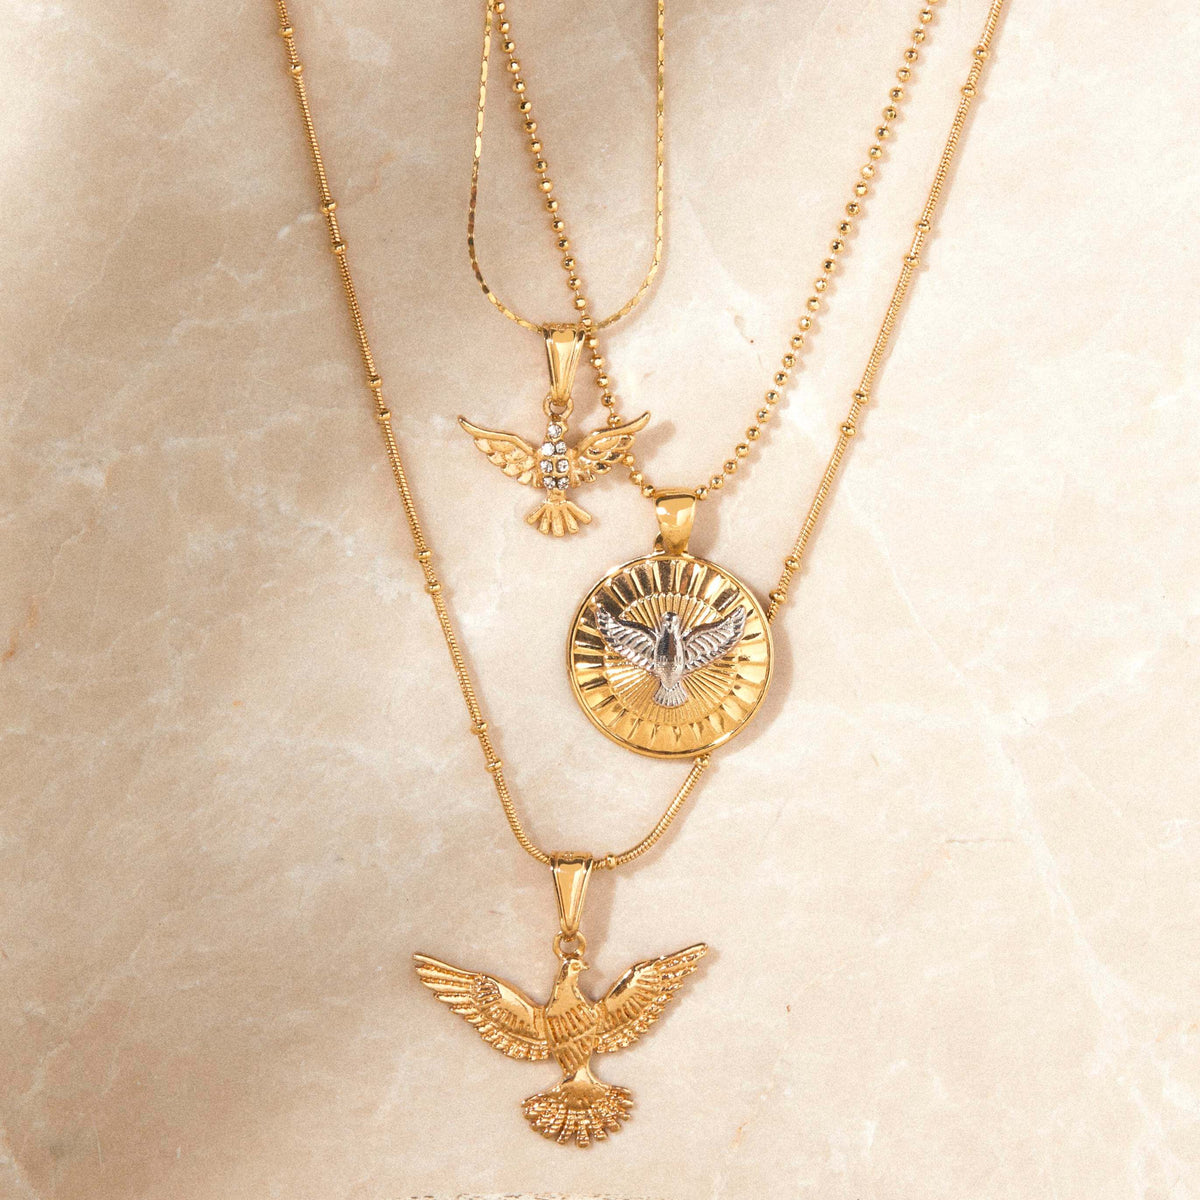 Songbird Necklace